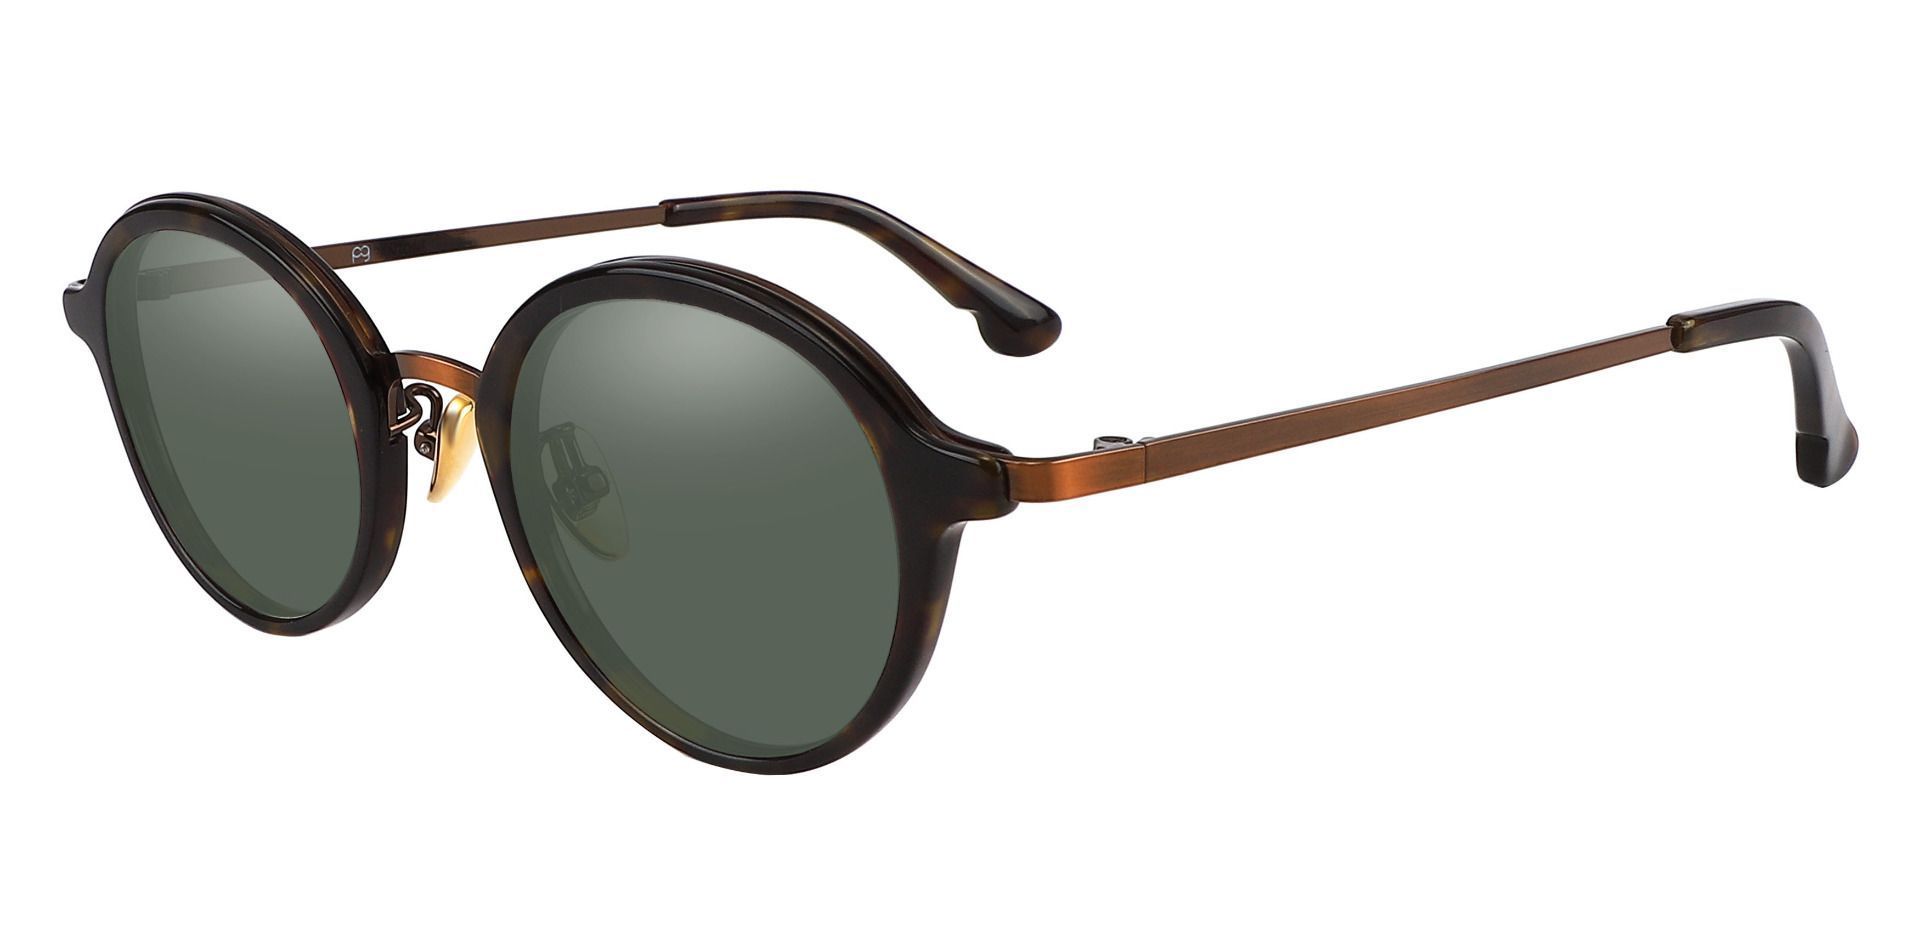 Humphrey Oval Prescription Sunglasses - Tortoise Frame With Green Lenses